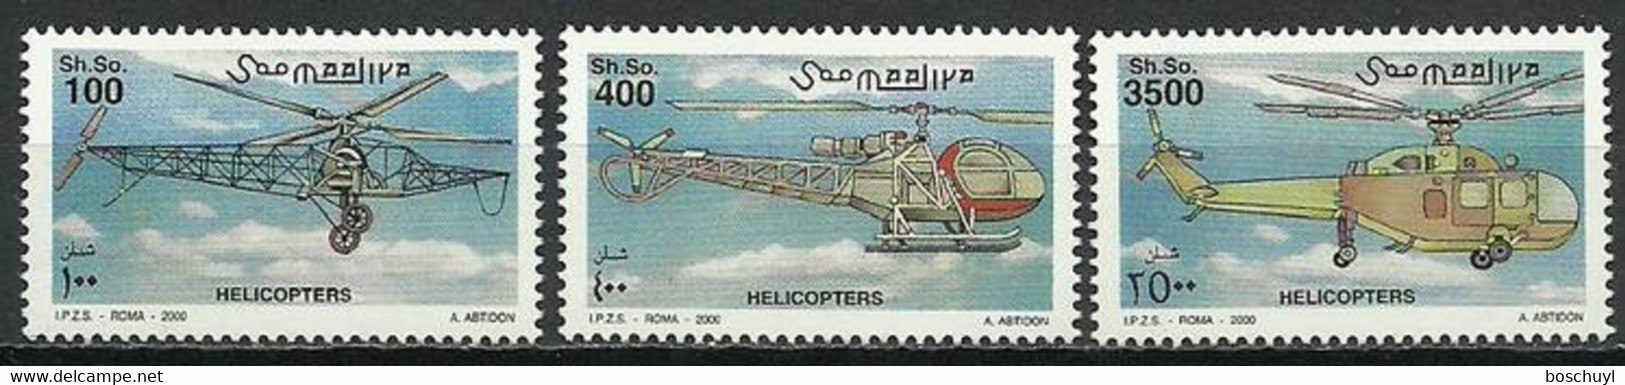 Somalia, 2000, Helicopters, Aviation, MNH, Michel 811-813 - Somalie (1960-...)